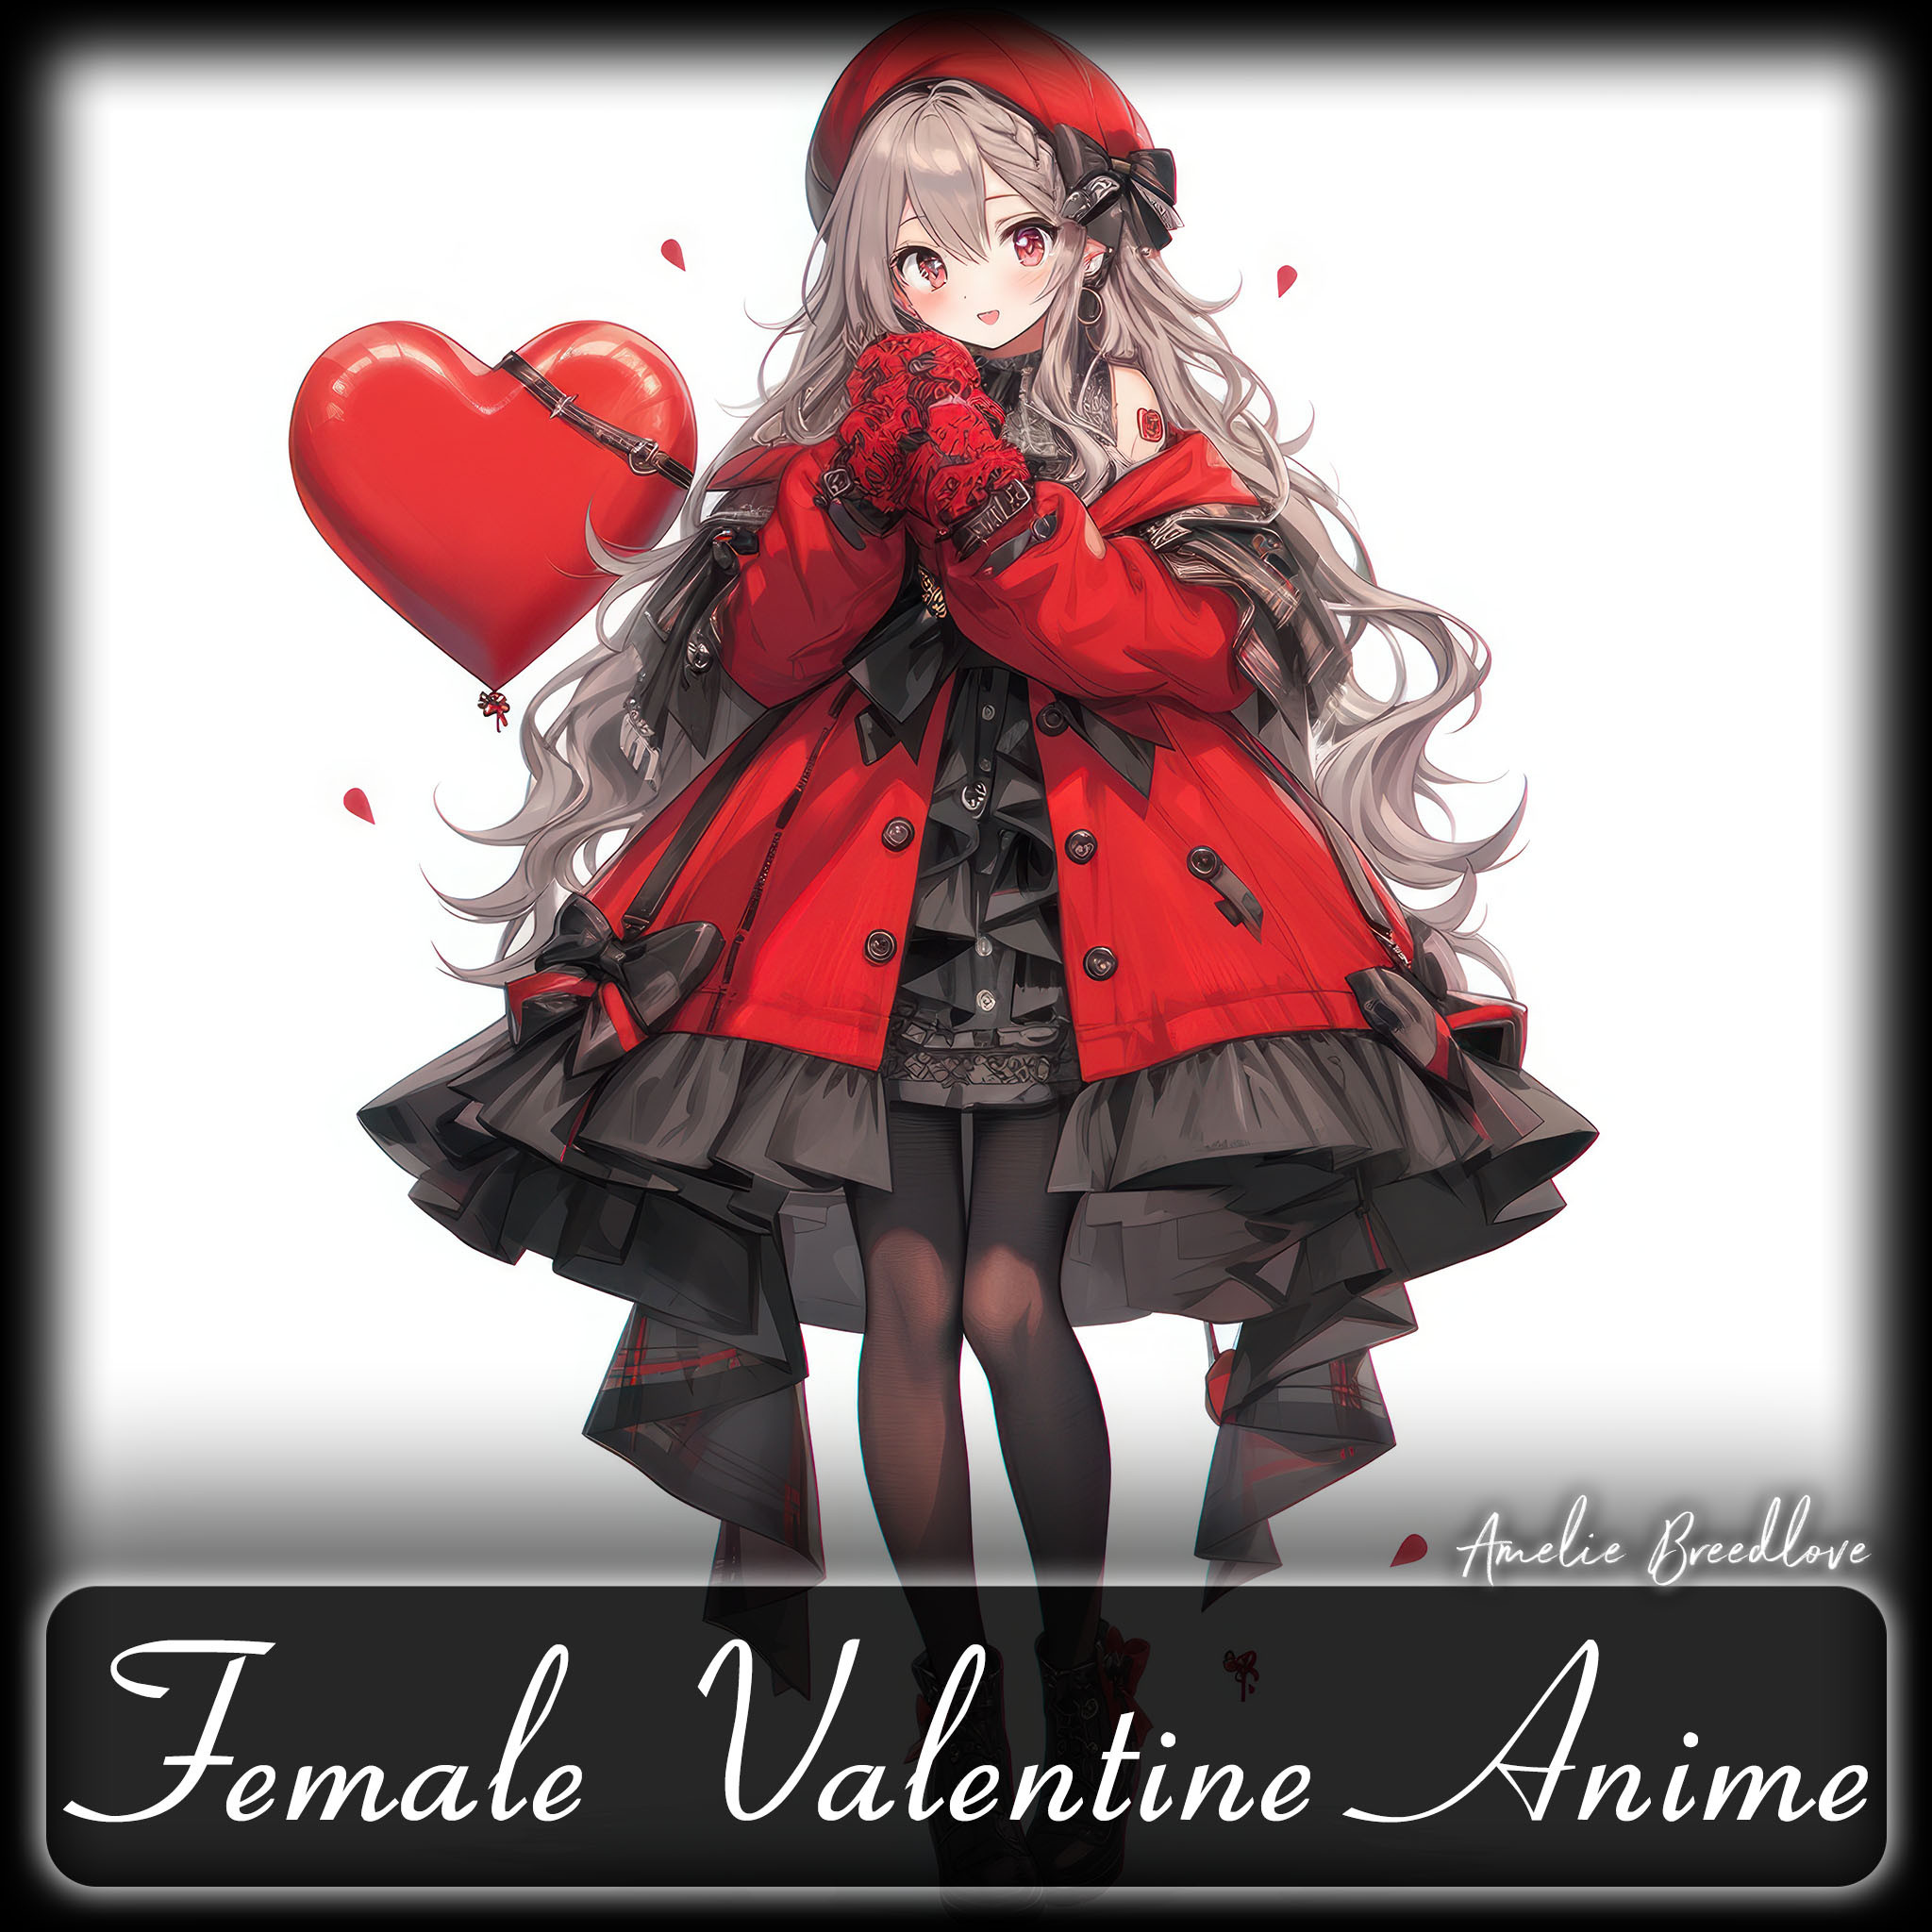 Anime Valentine Digital art by nihalsazed on DeviantArt